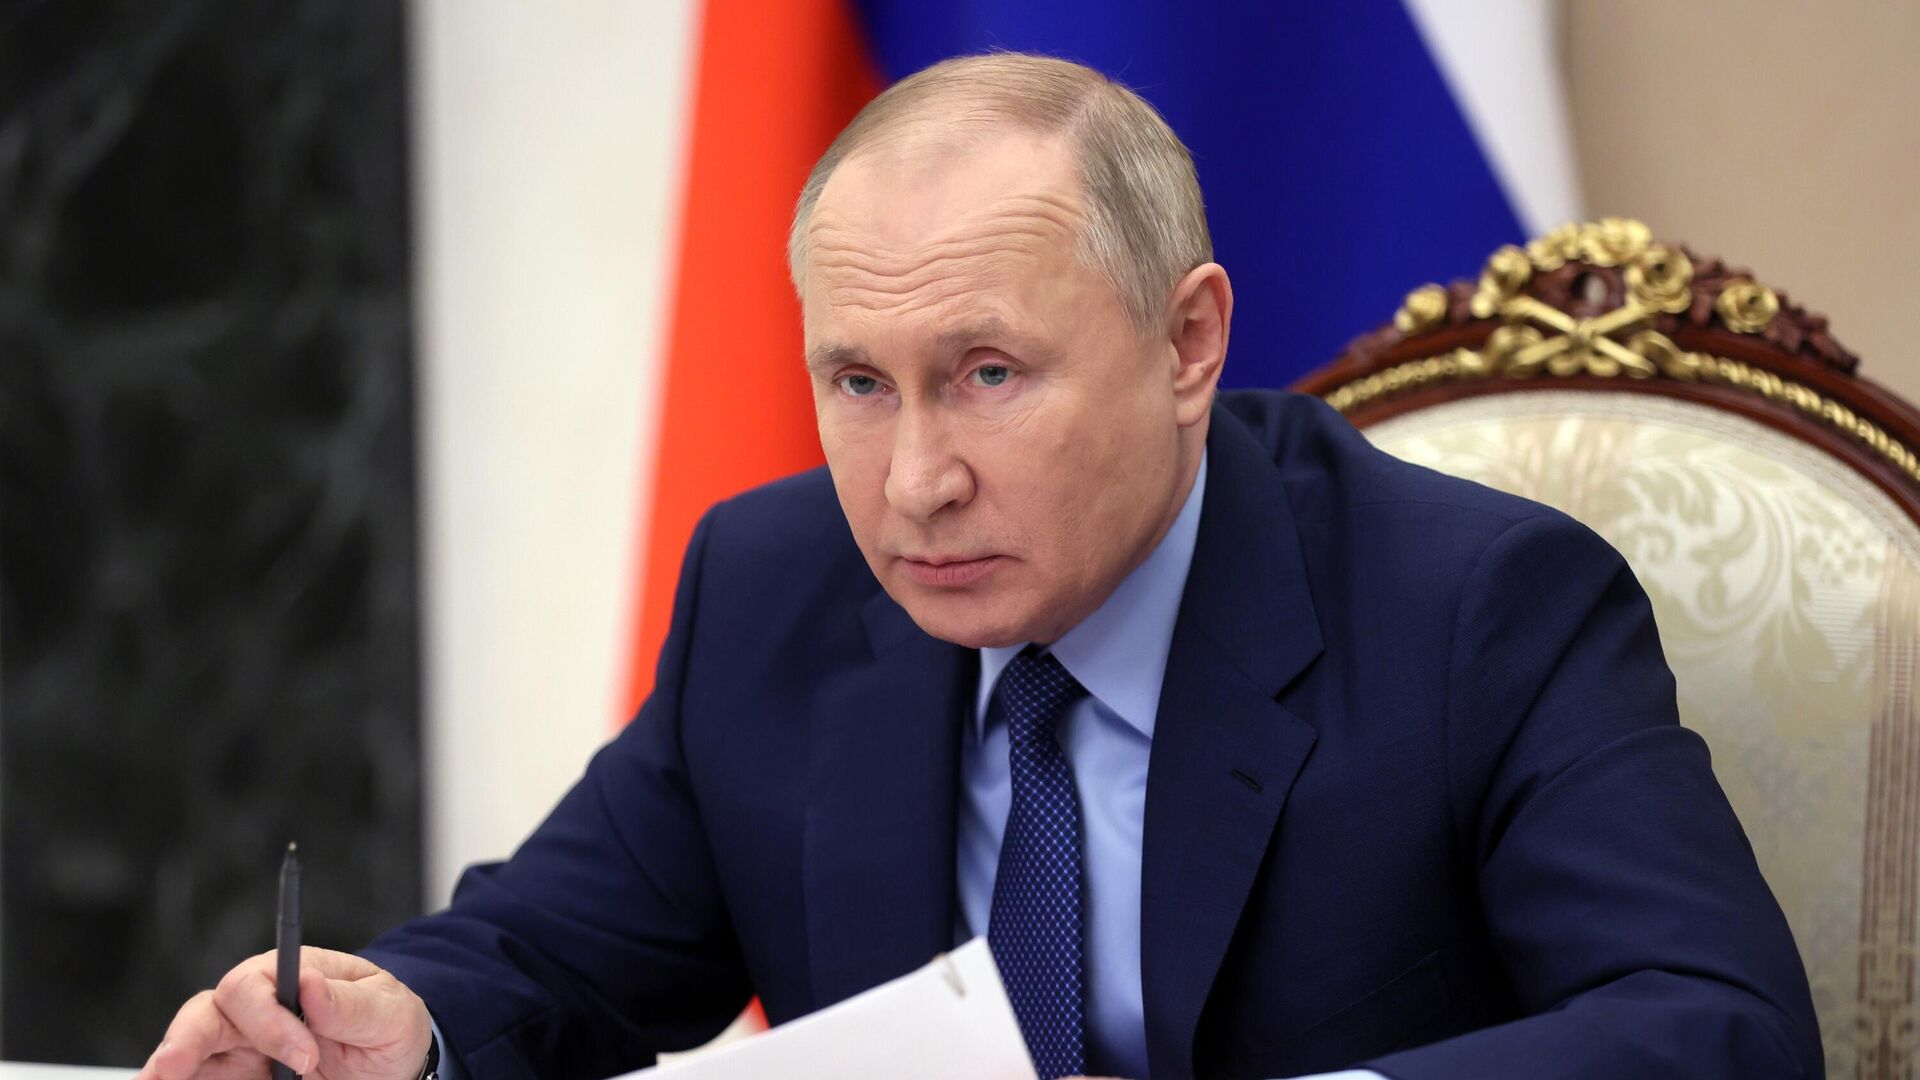 ТЭО по проекту газопровода через Монголию скоро будет готово, заявил Путин